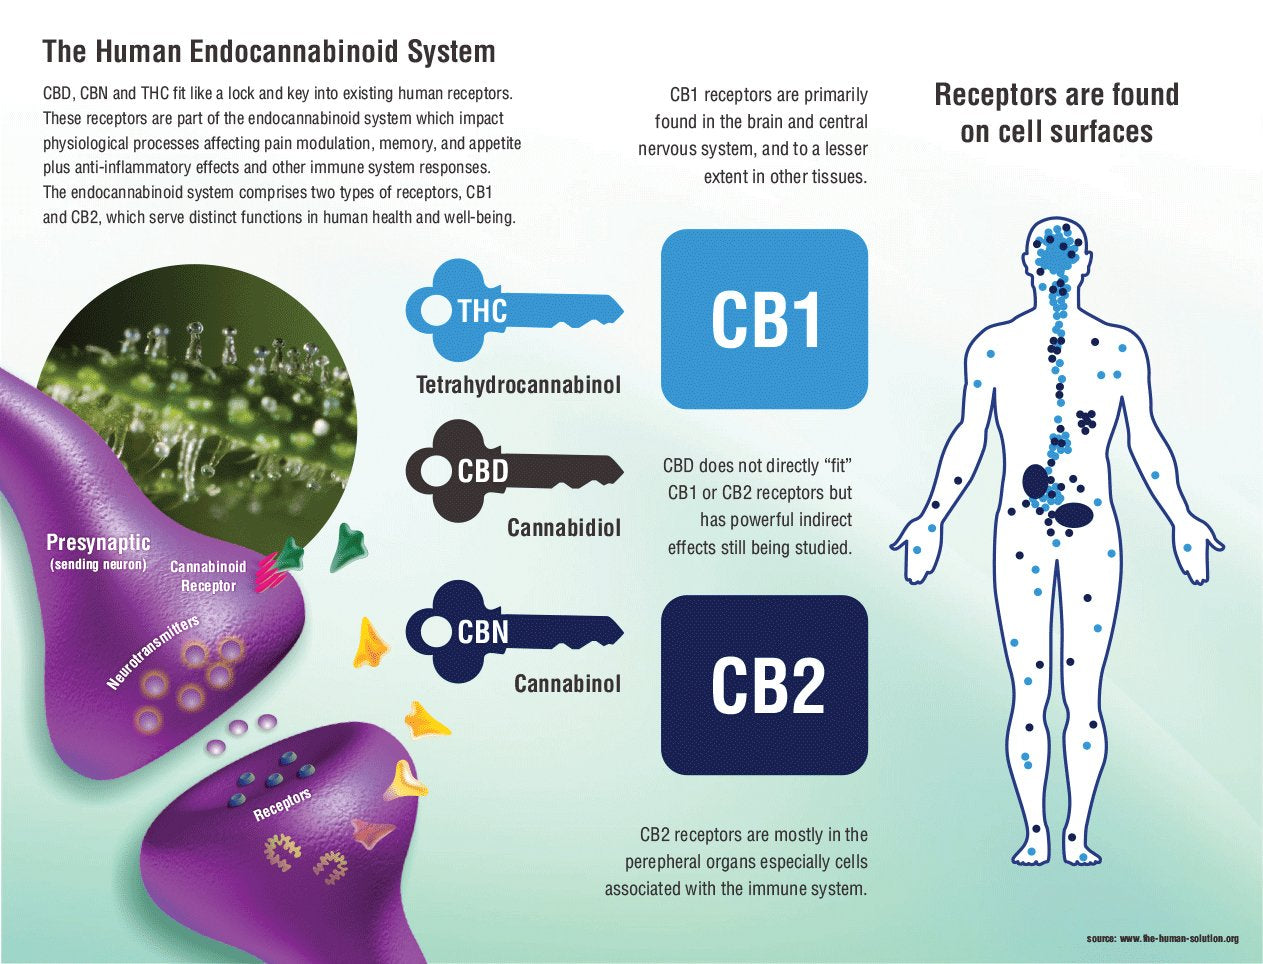 The Human Endocannabinoid System